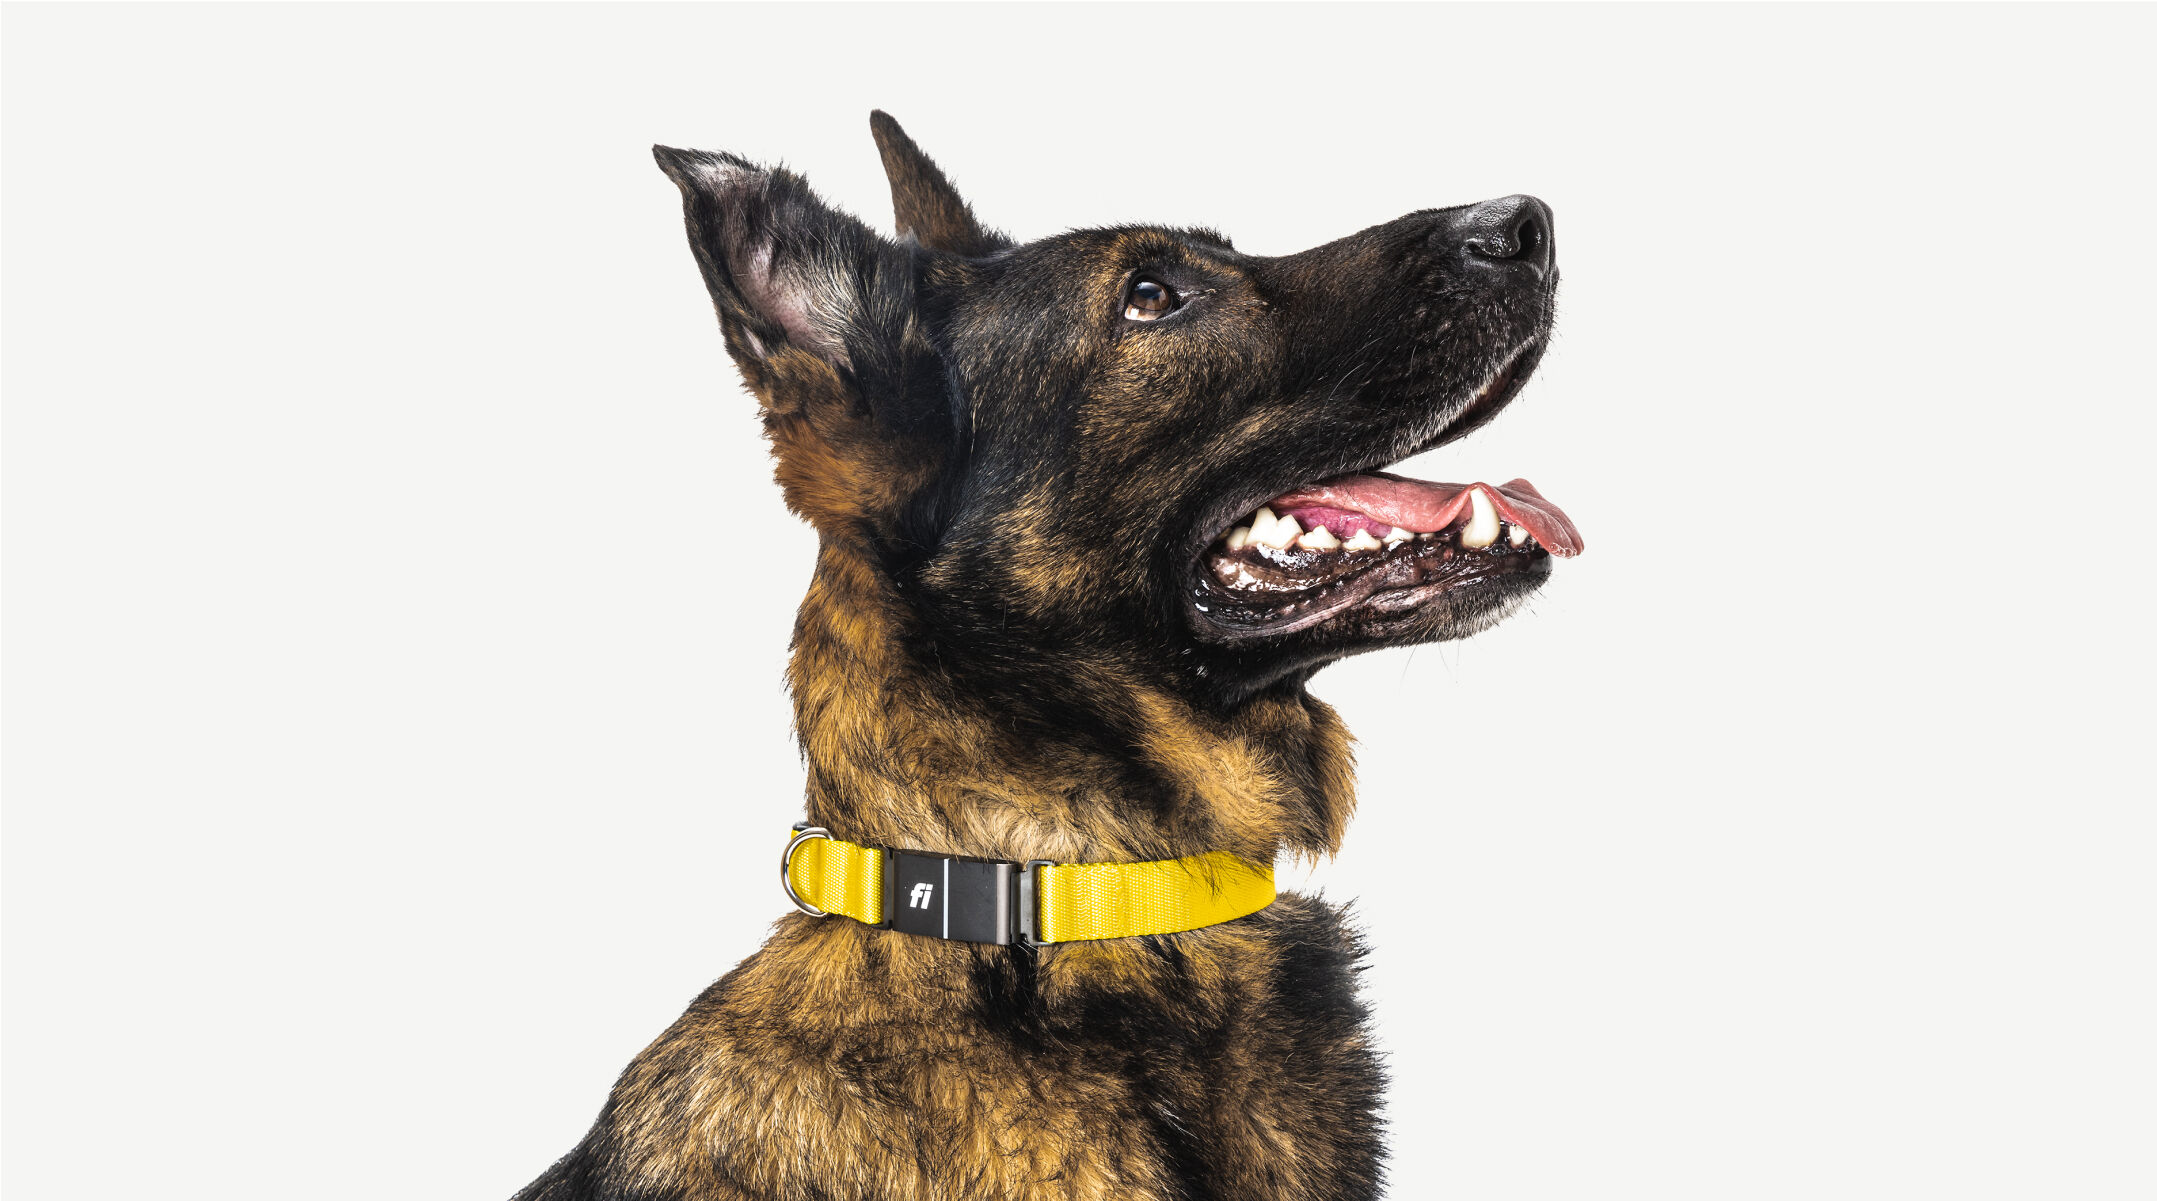 Finster dog GPS tracker